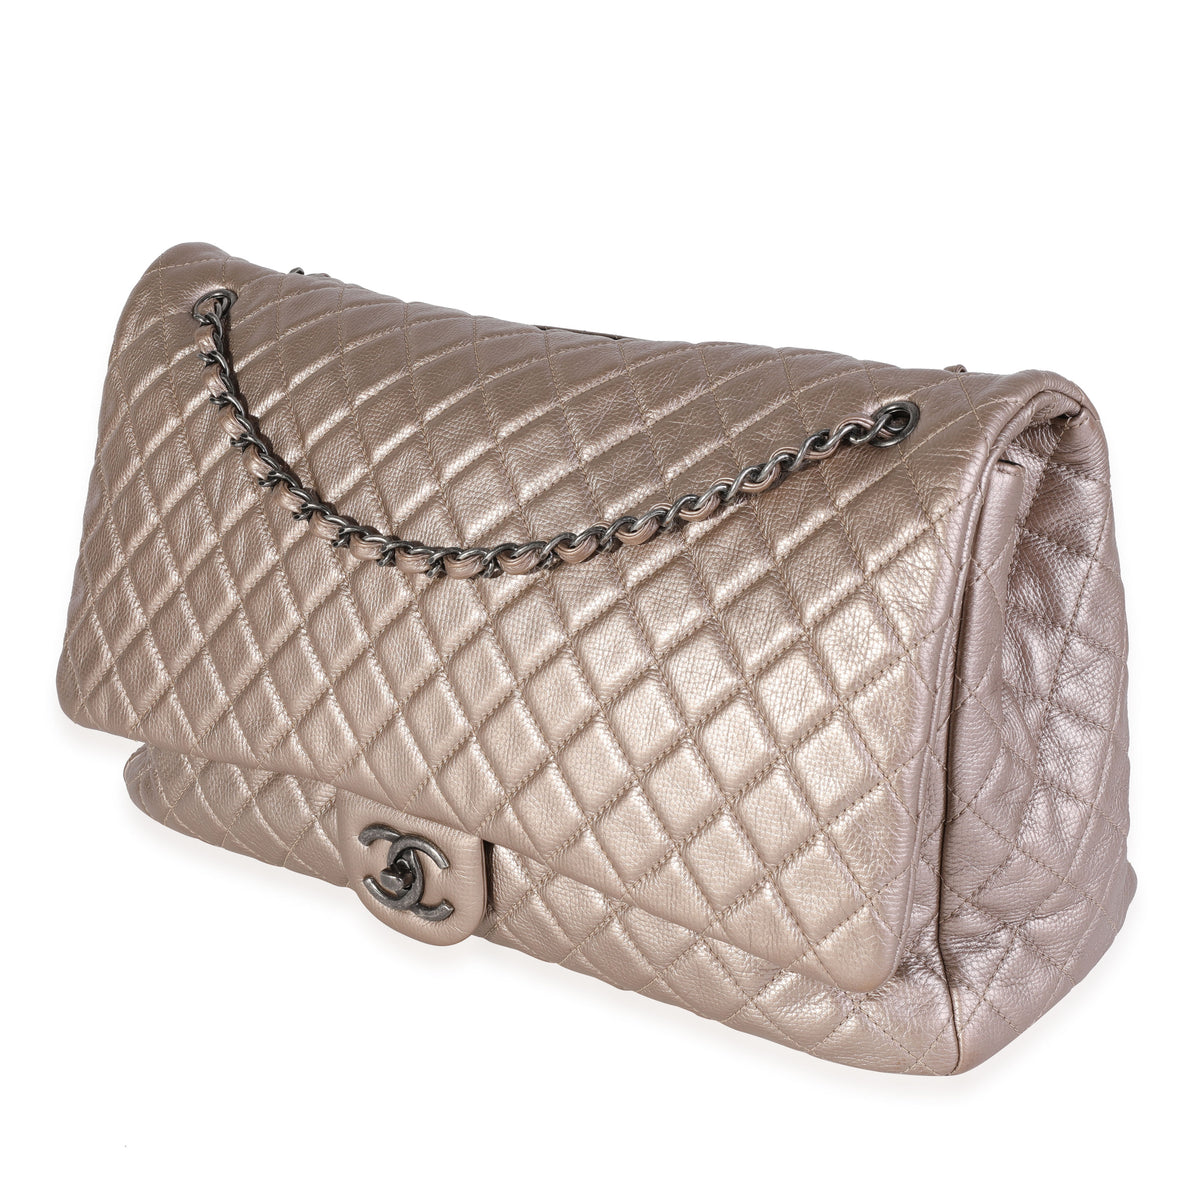 2016 Chanel Bag Collection - 64 For Sale on 1stDibs